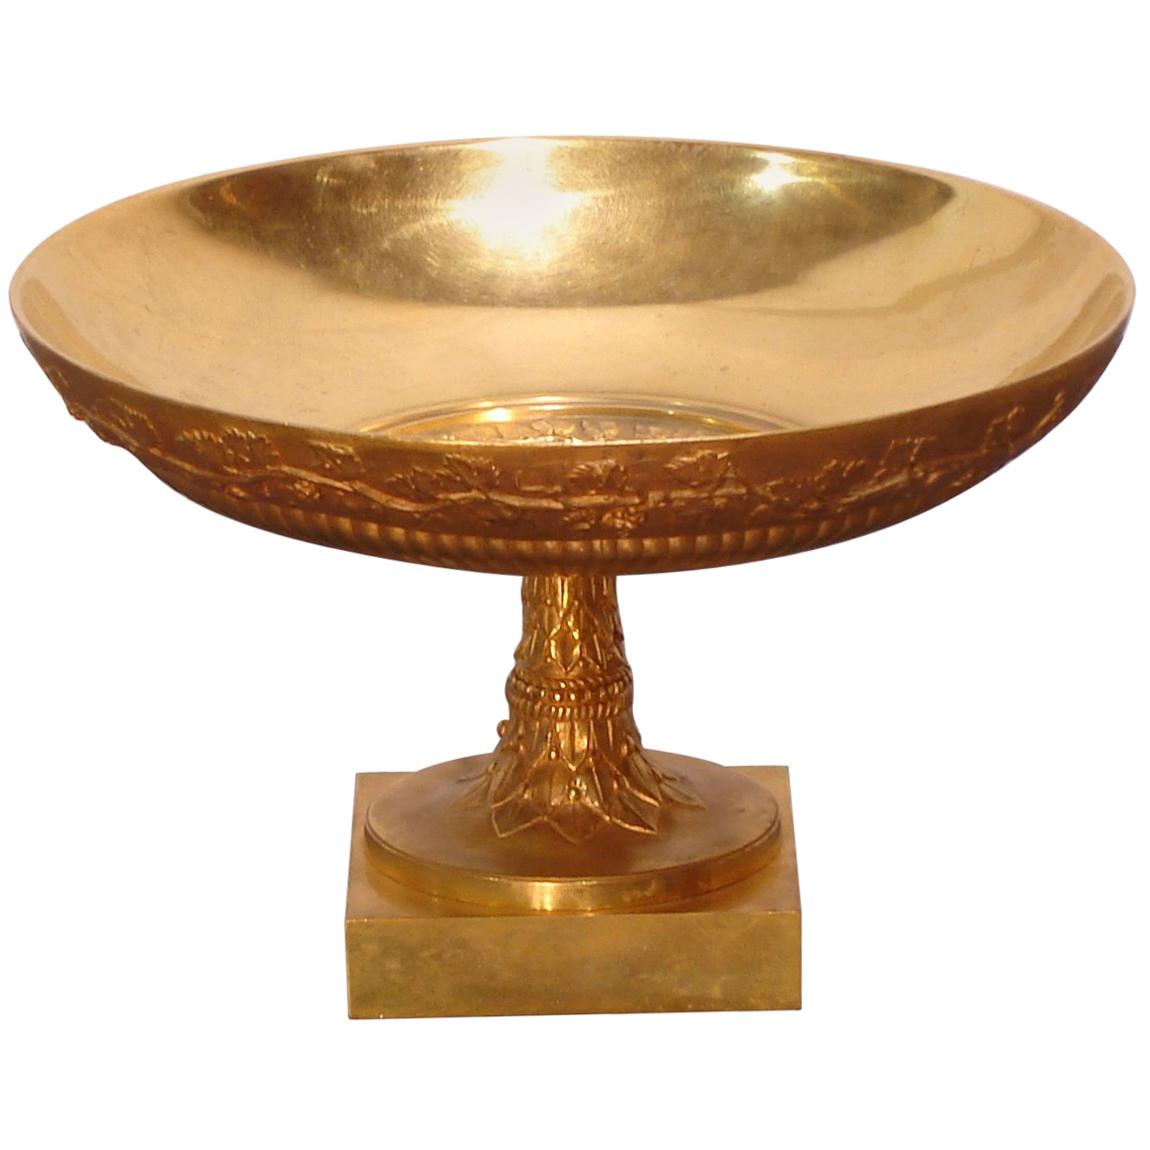 Medusa Head Golden Bronze Centrepiece Fruit Bowl Empire Period, France